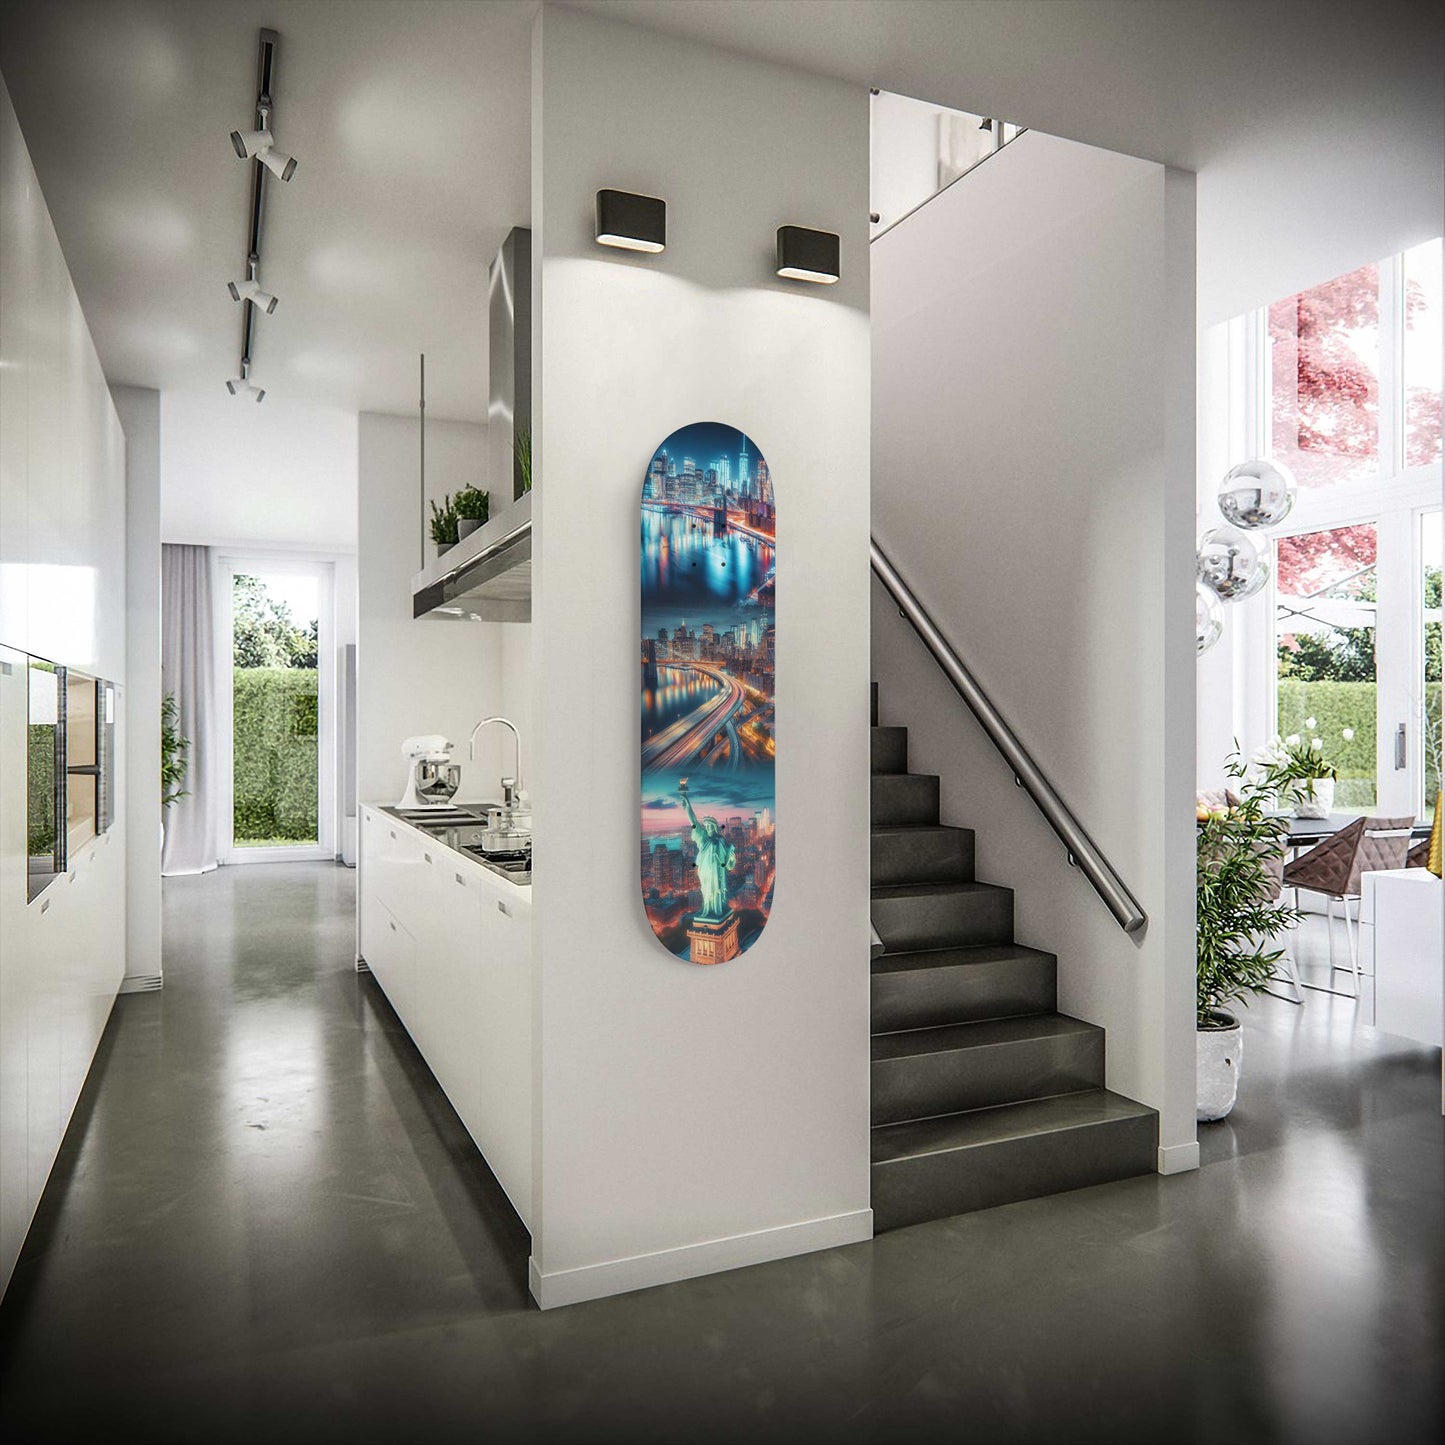 I Love New York Cityscaper 1-Deck Skateboard Wall Art